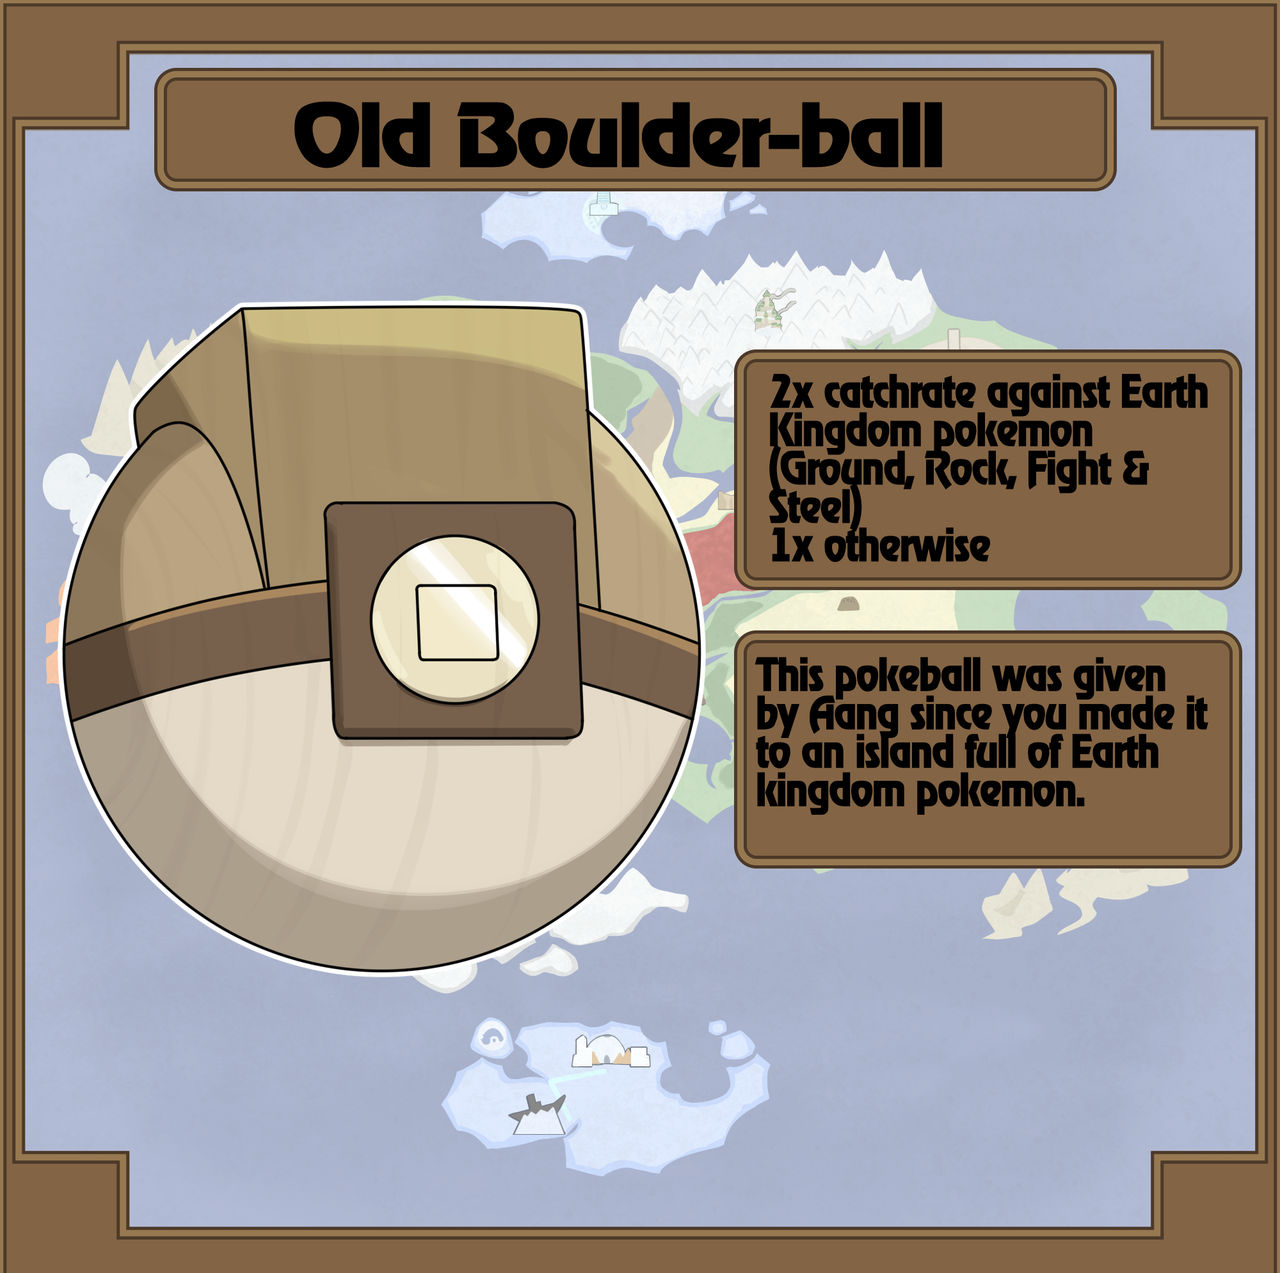 New item: Old Boulder-ball by Arteses-Canvas on DeviantArt